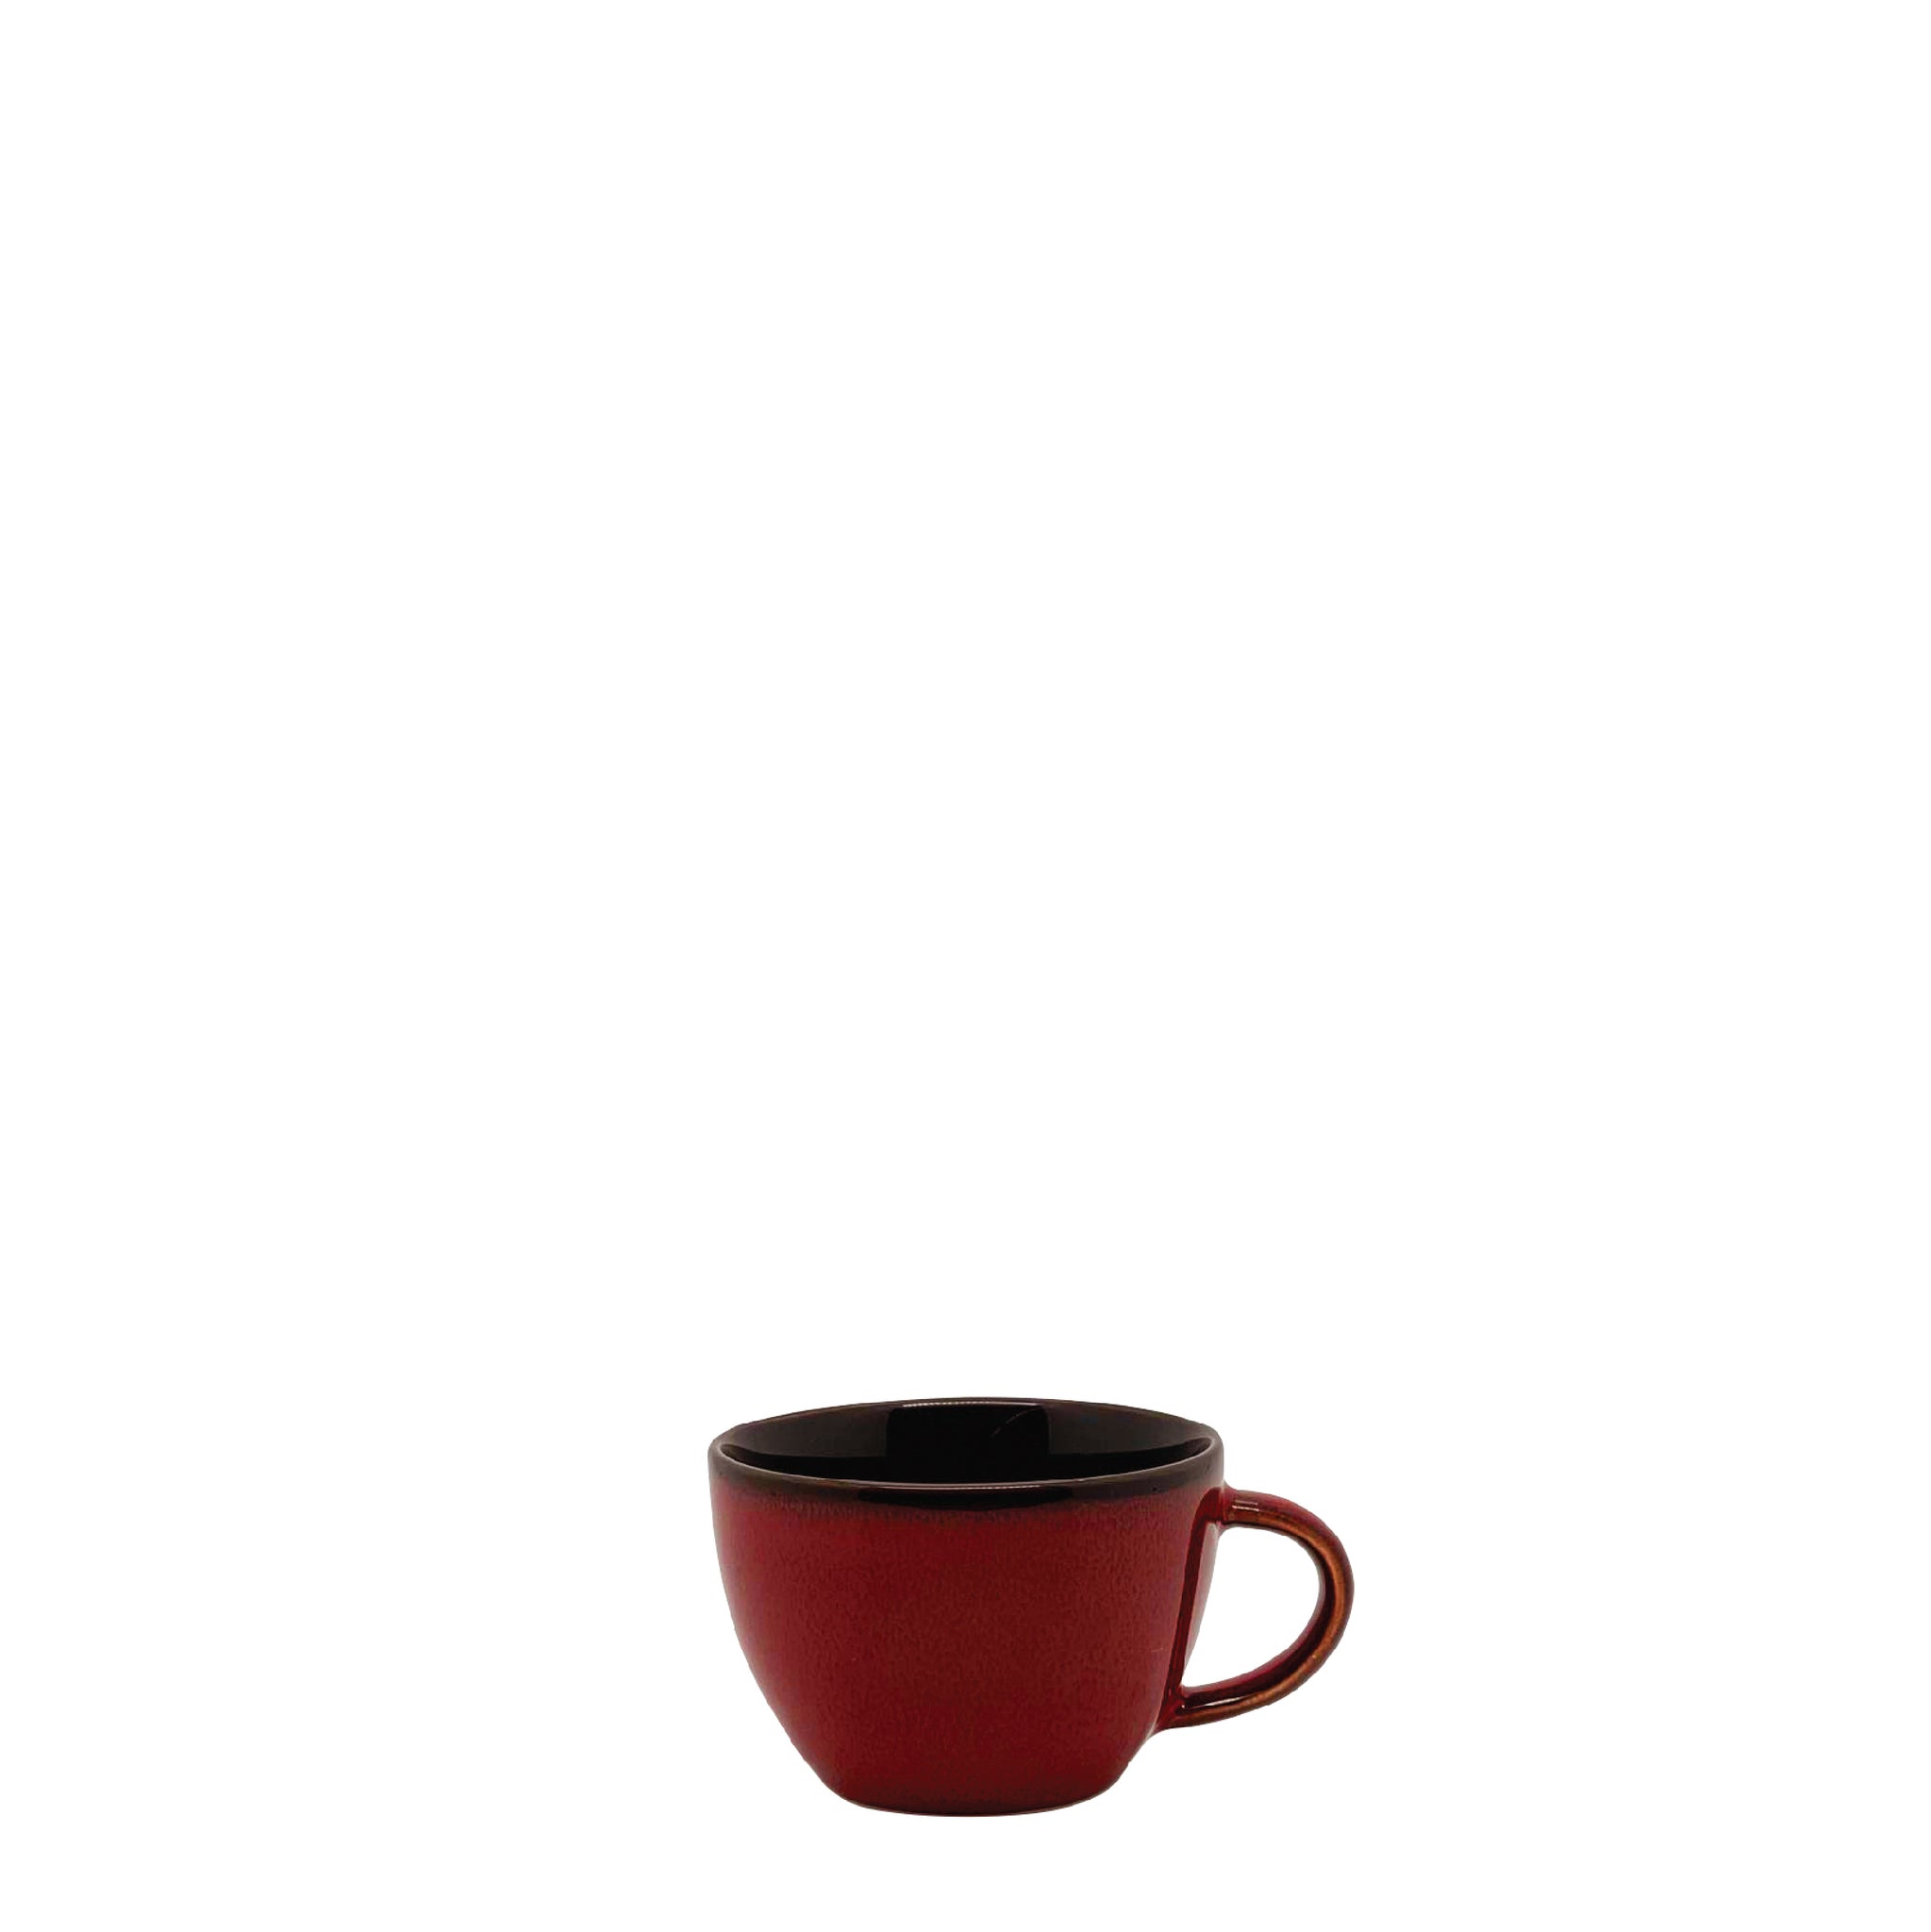 RUSTIC Coffee Cup 186 ml (6pcs per pack) Average $35/pc